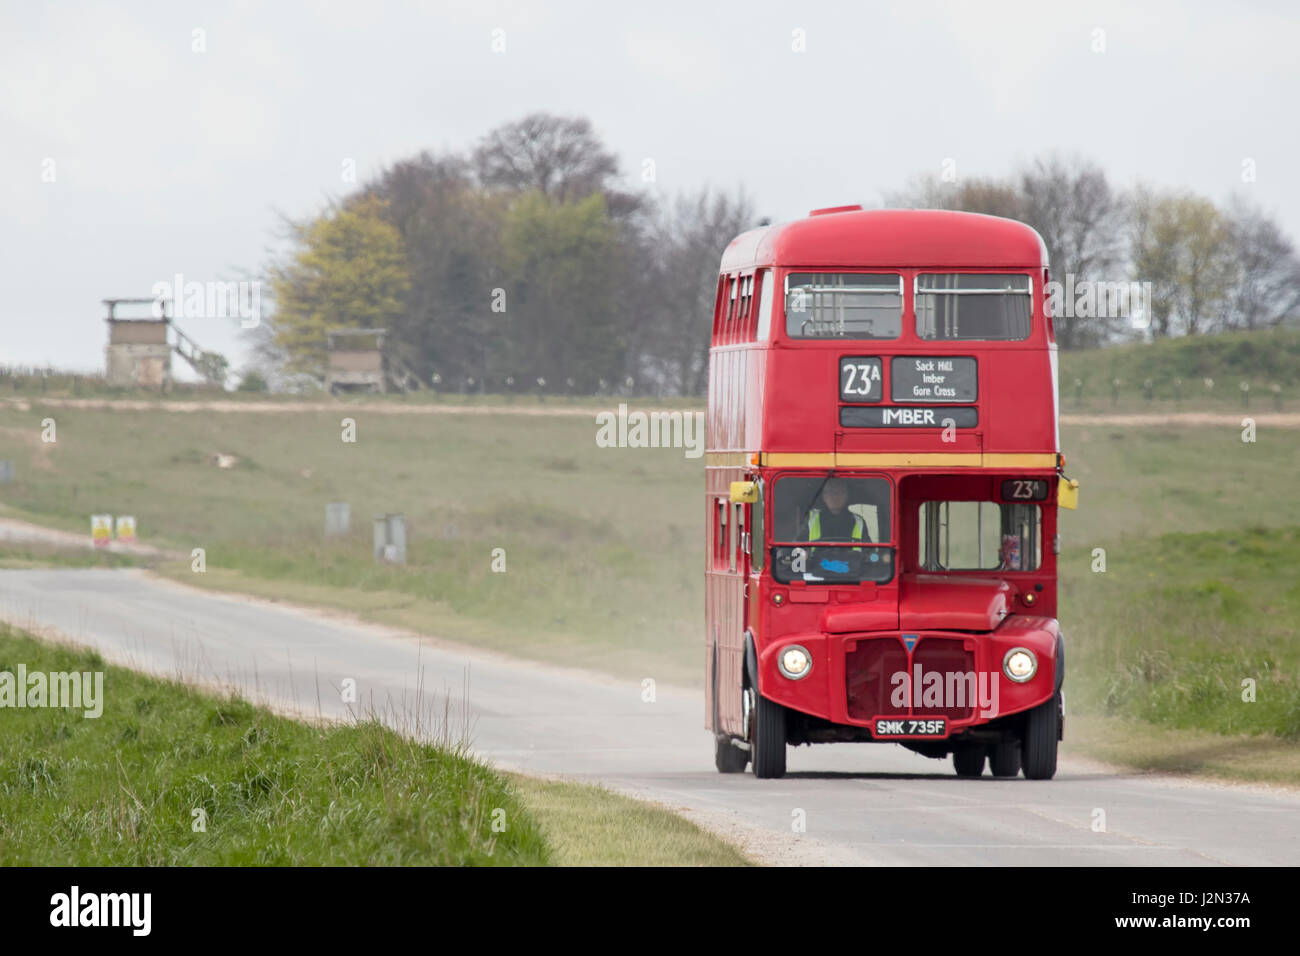 London Red Bus Routemaster su Salisbury Plain gamme militari in direzione di Imber Village, Salisbury Plain, Wiltshire, Inghilterra Foto Stock